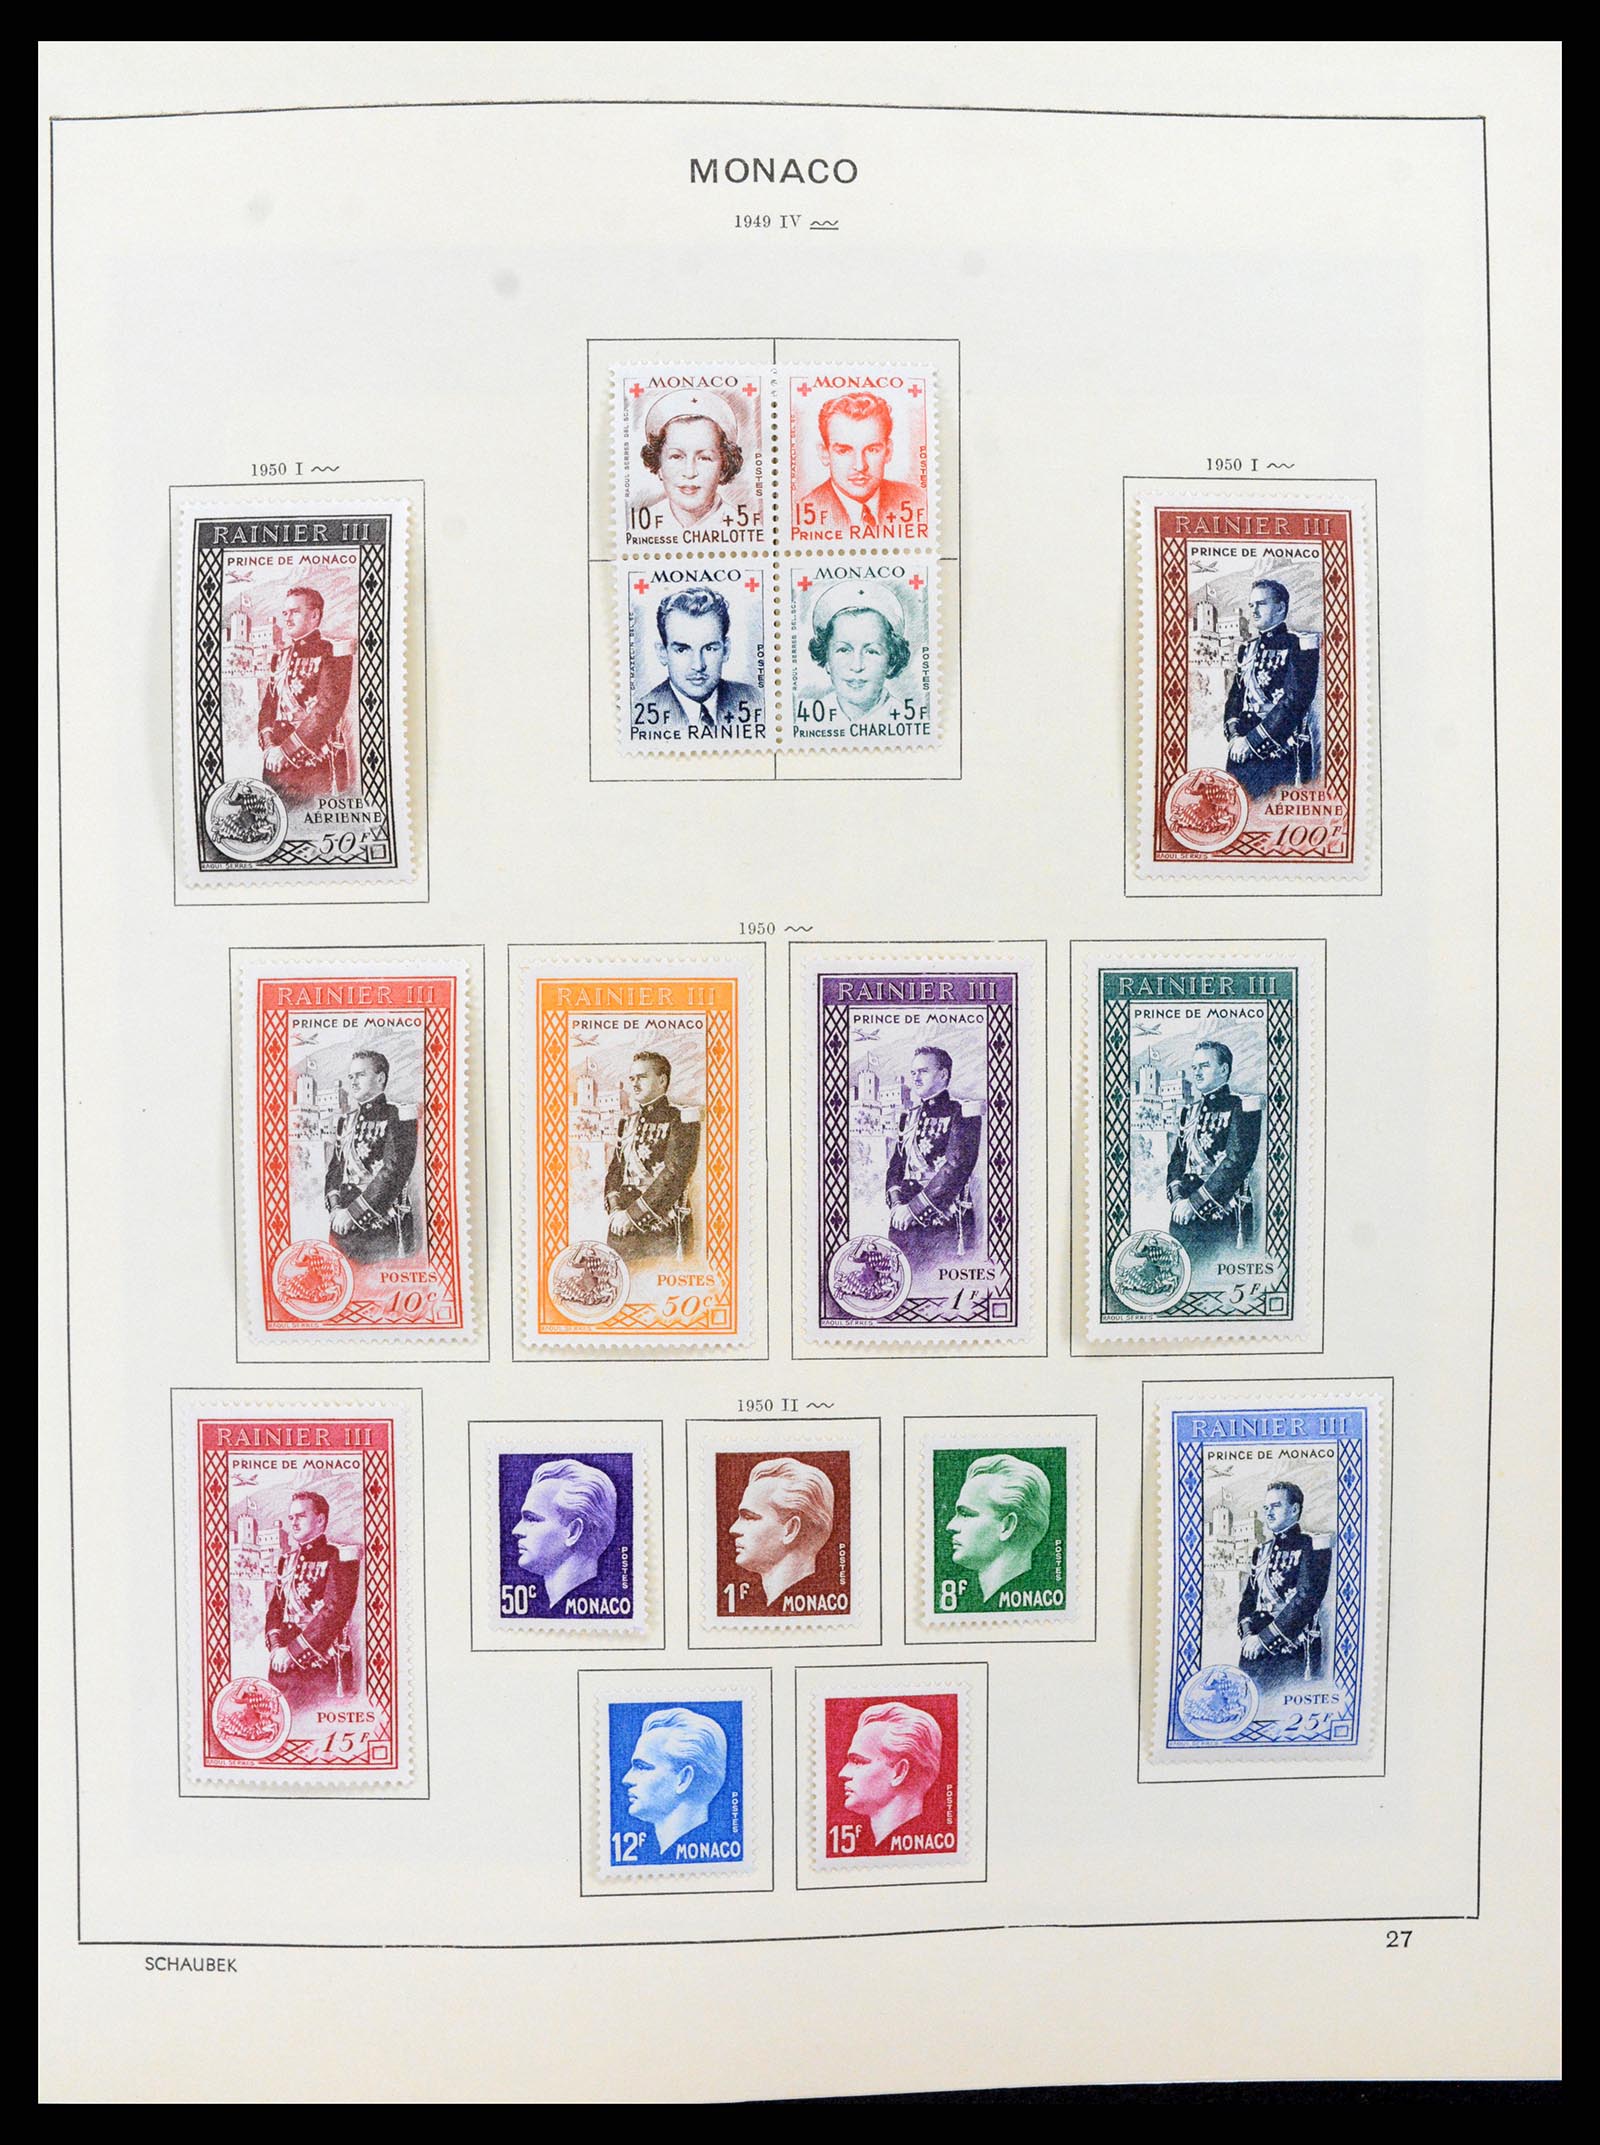 37570 028 - Stamp collection 37570 Monaco 1885-2013.